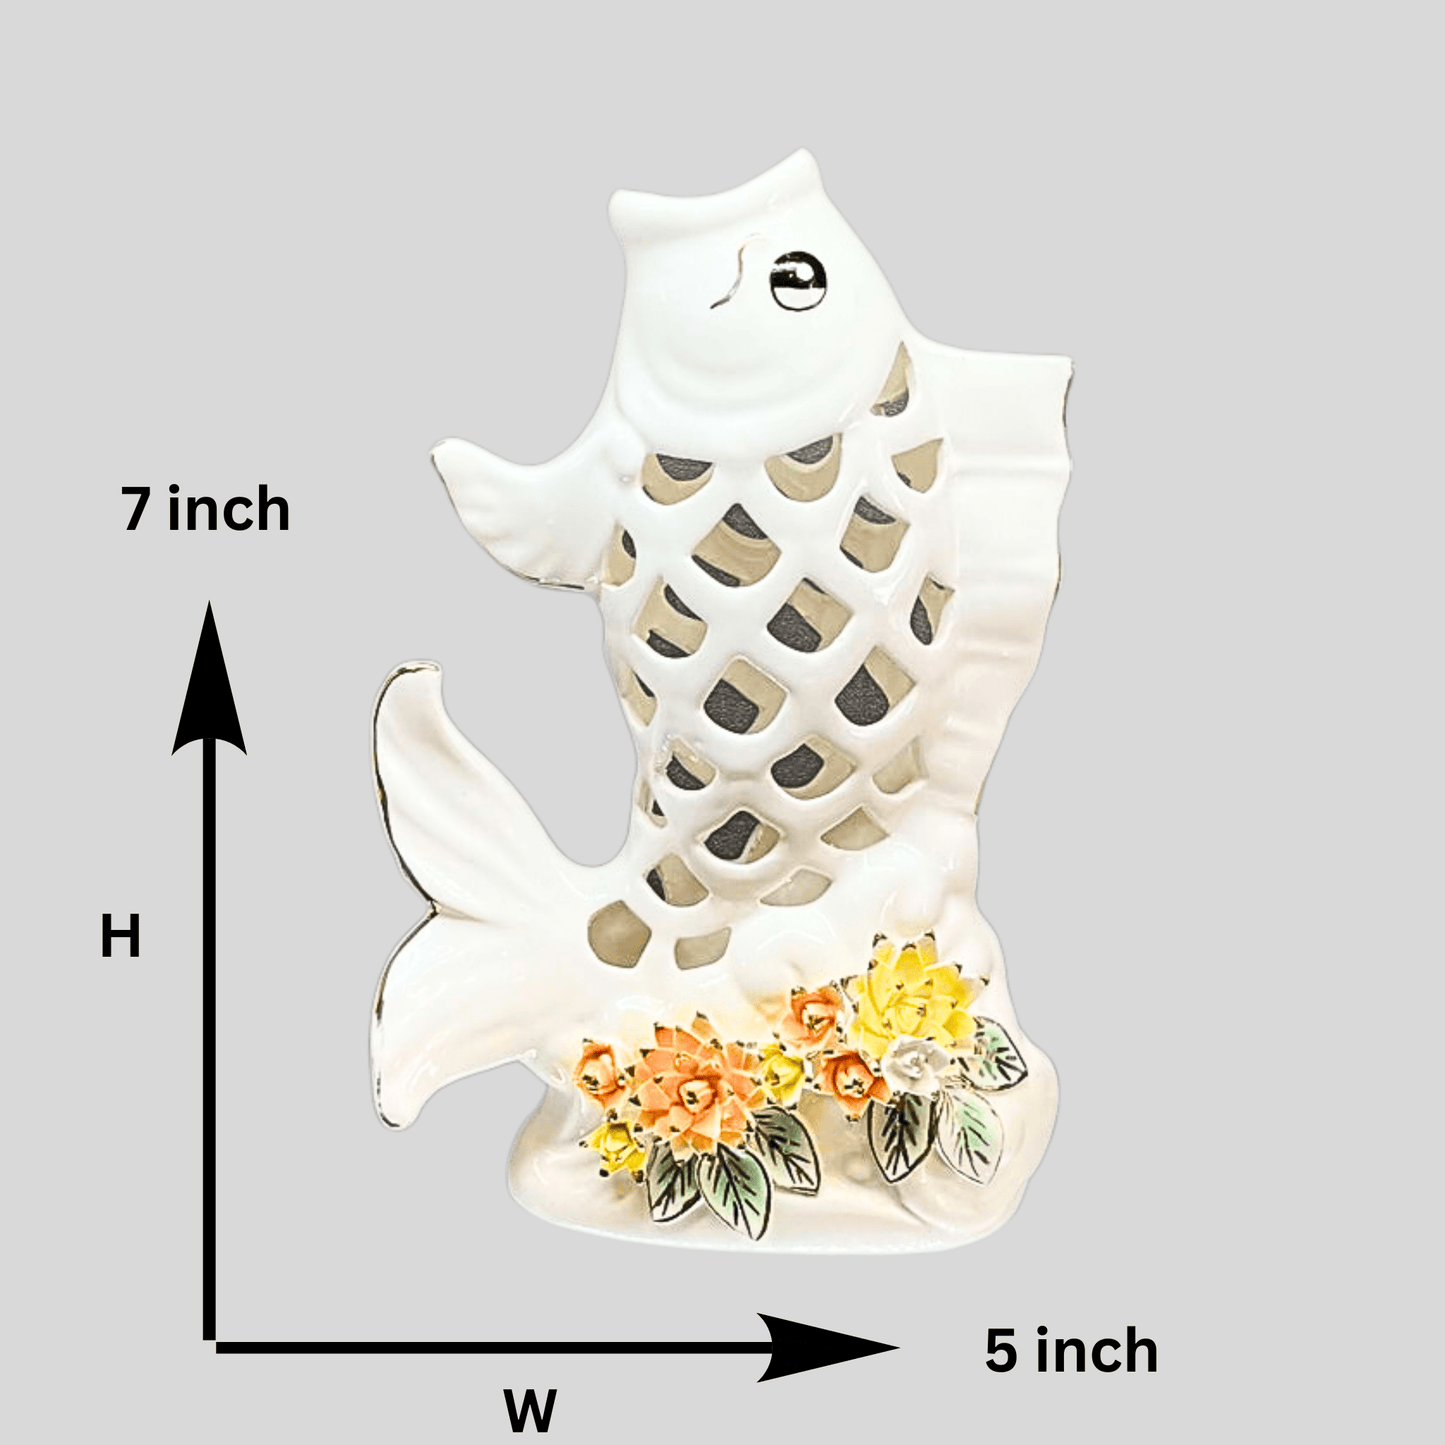 White Rose Decorative Fish